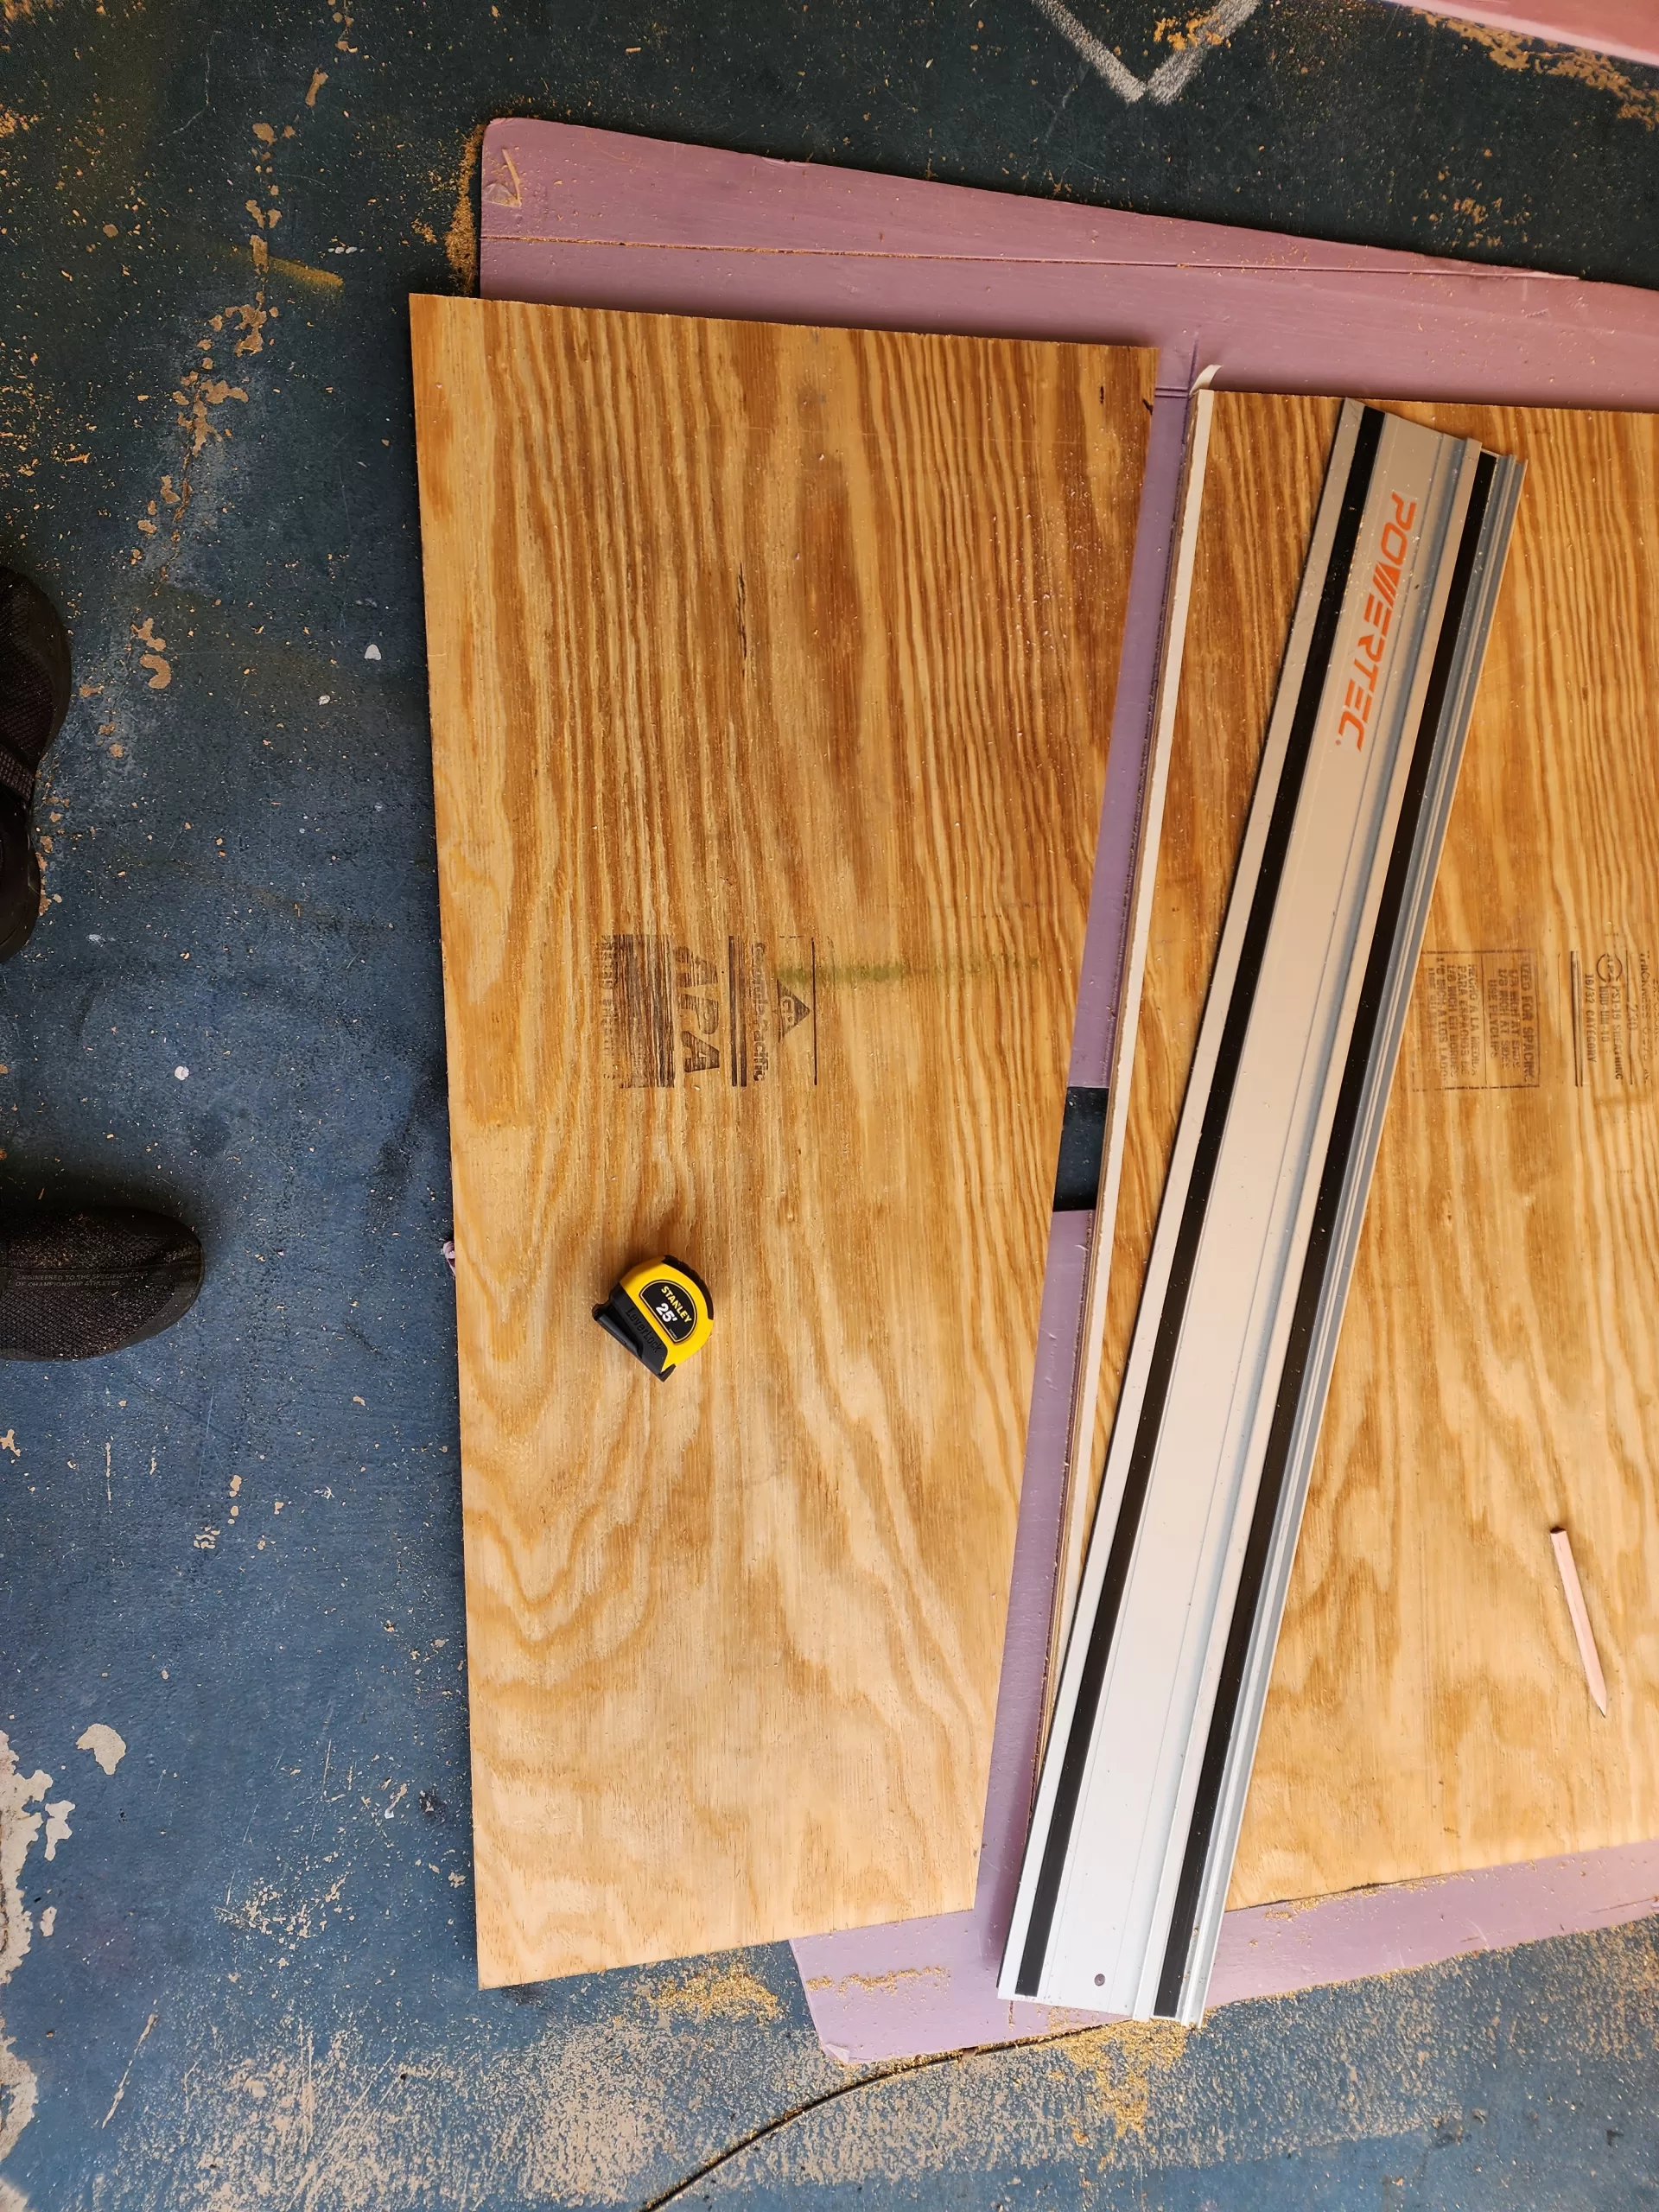 22/32 plywood in store, rough cut lumber on floor